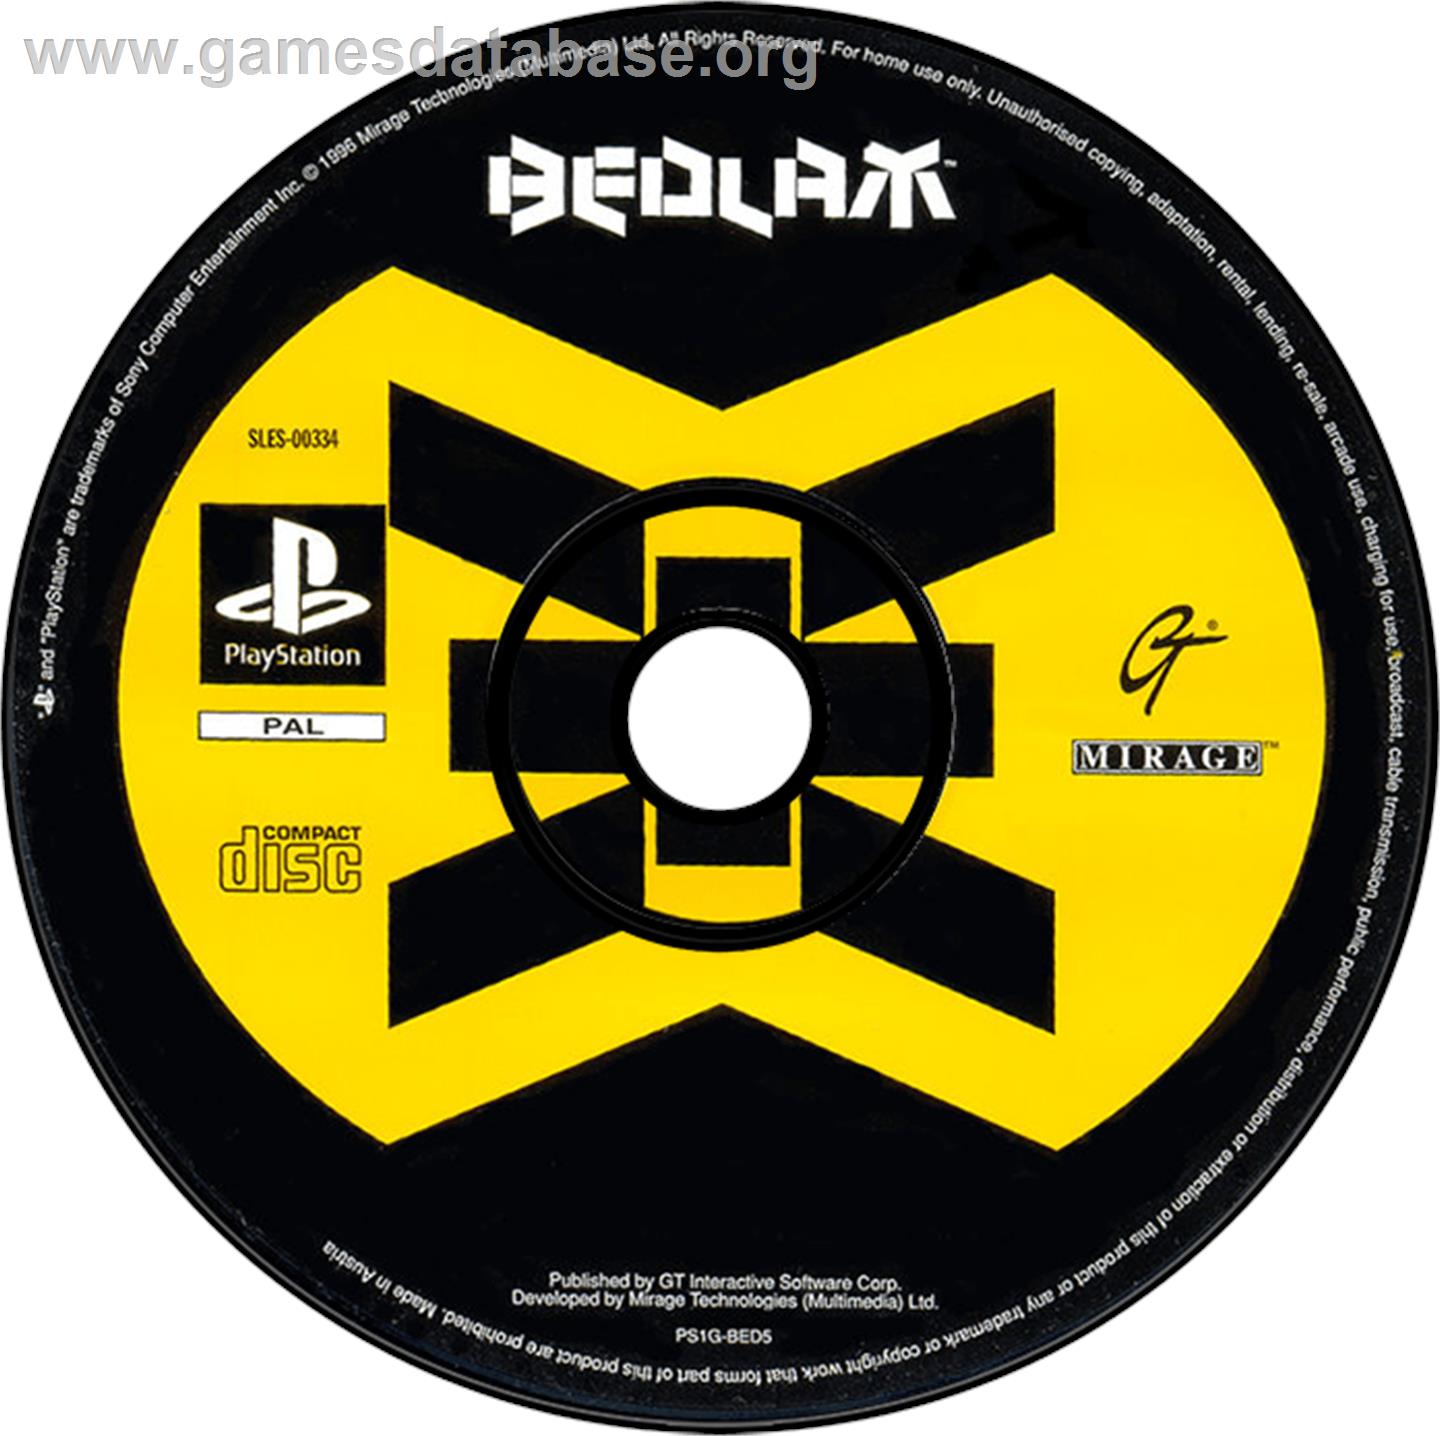 Bedlam - Sony Playstation - Artwork - Disc